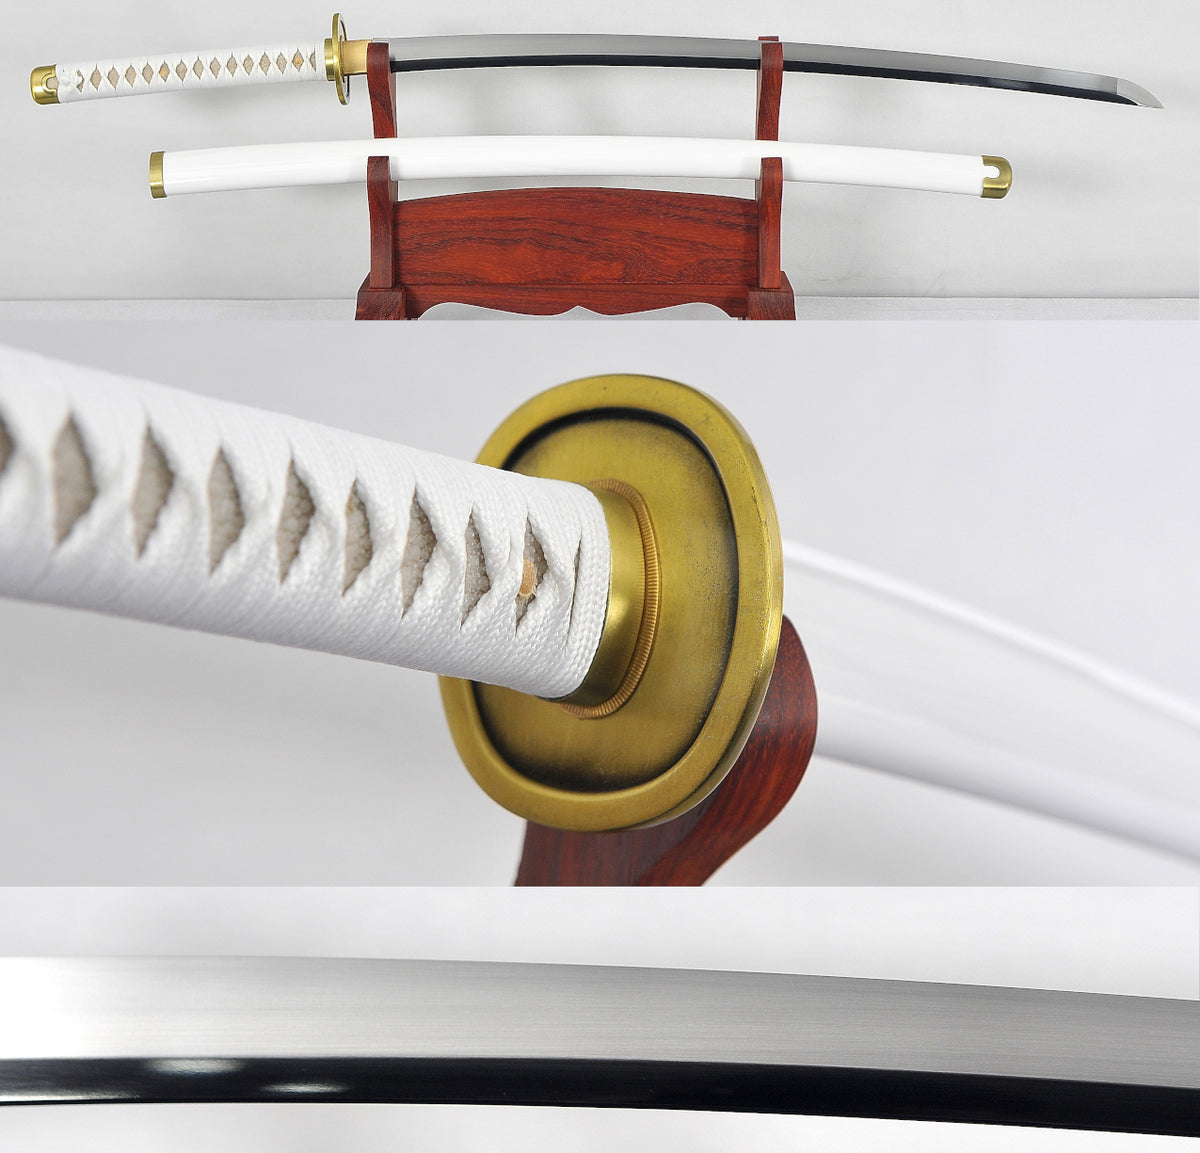 Zoro Katana  One Piece Roronoa Zoro Wado Ichimonji Real Katana Samurai  Sword Replica With White Scabbard - TrueKatana